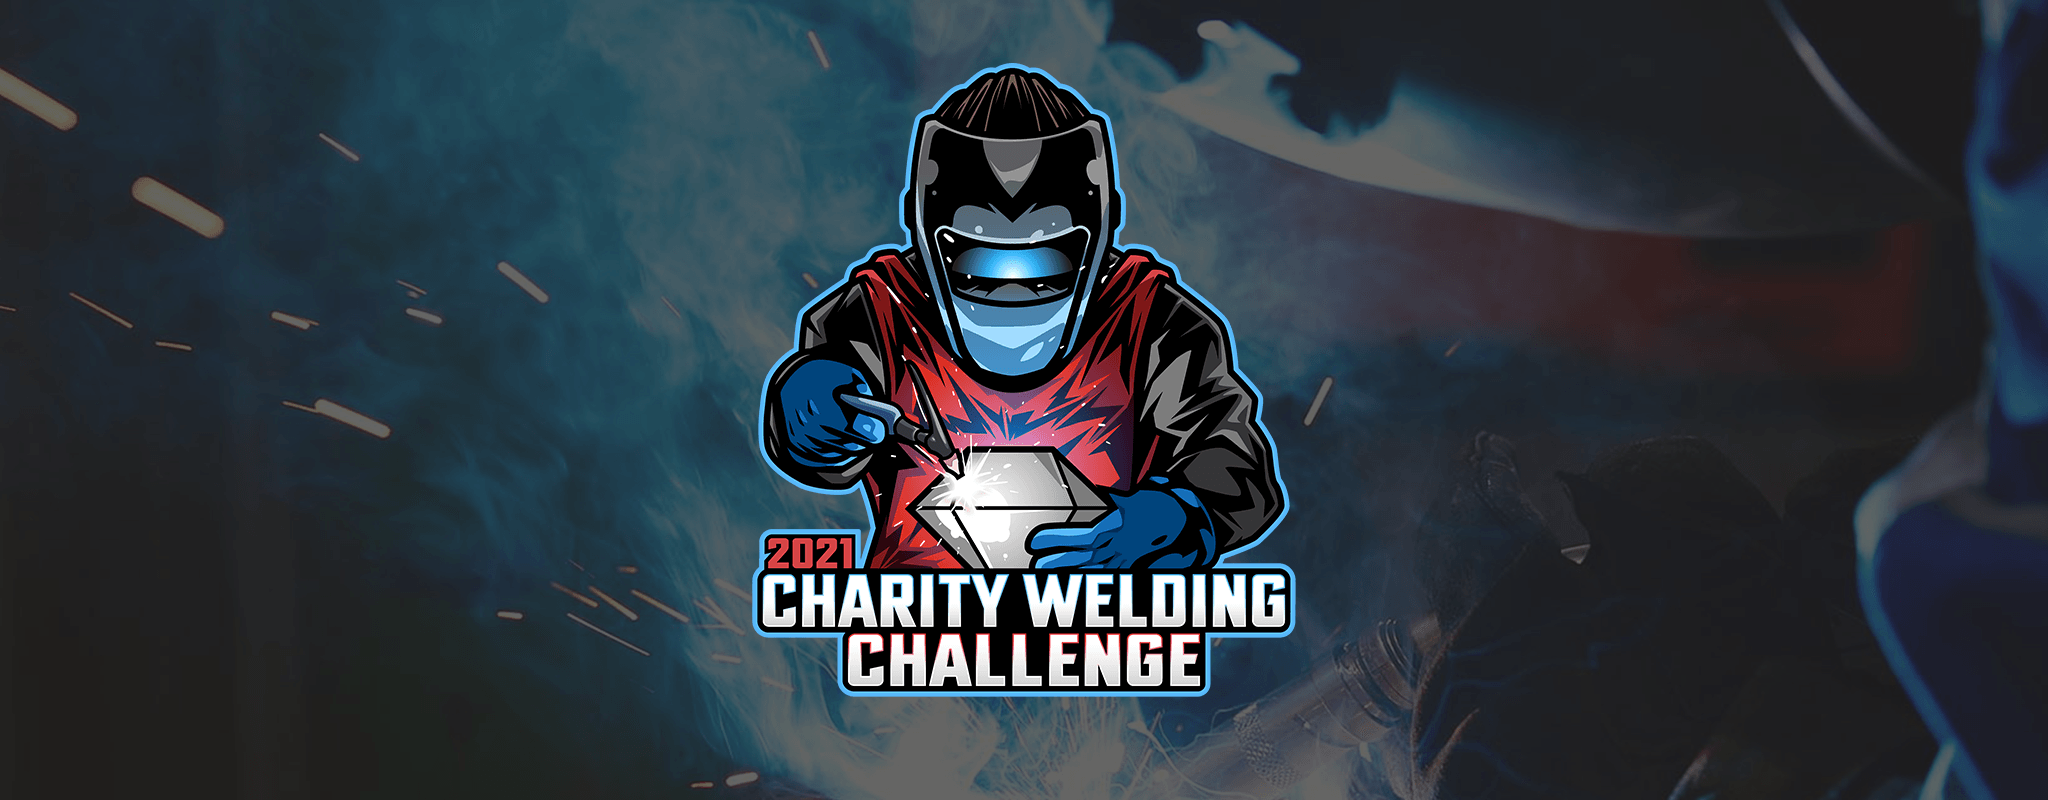 Charity Welding Challenge - Diamant